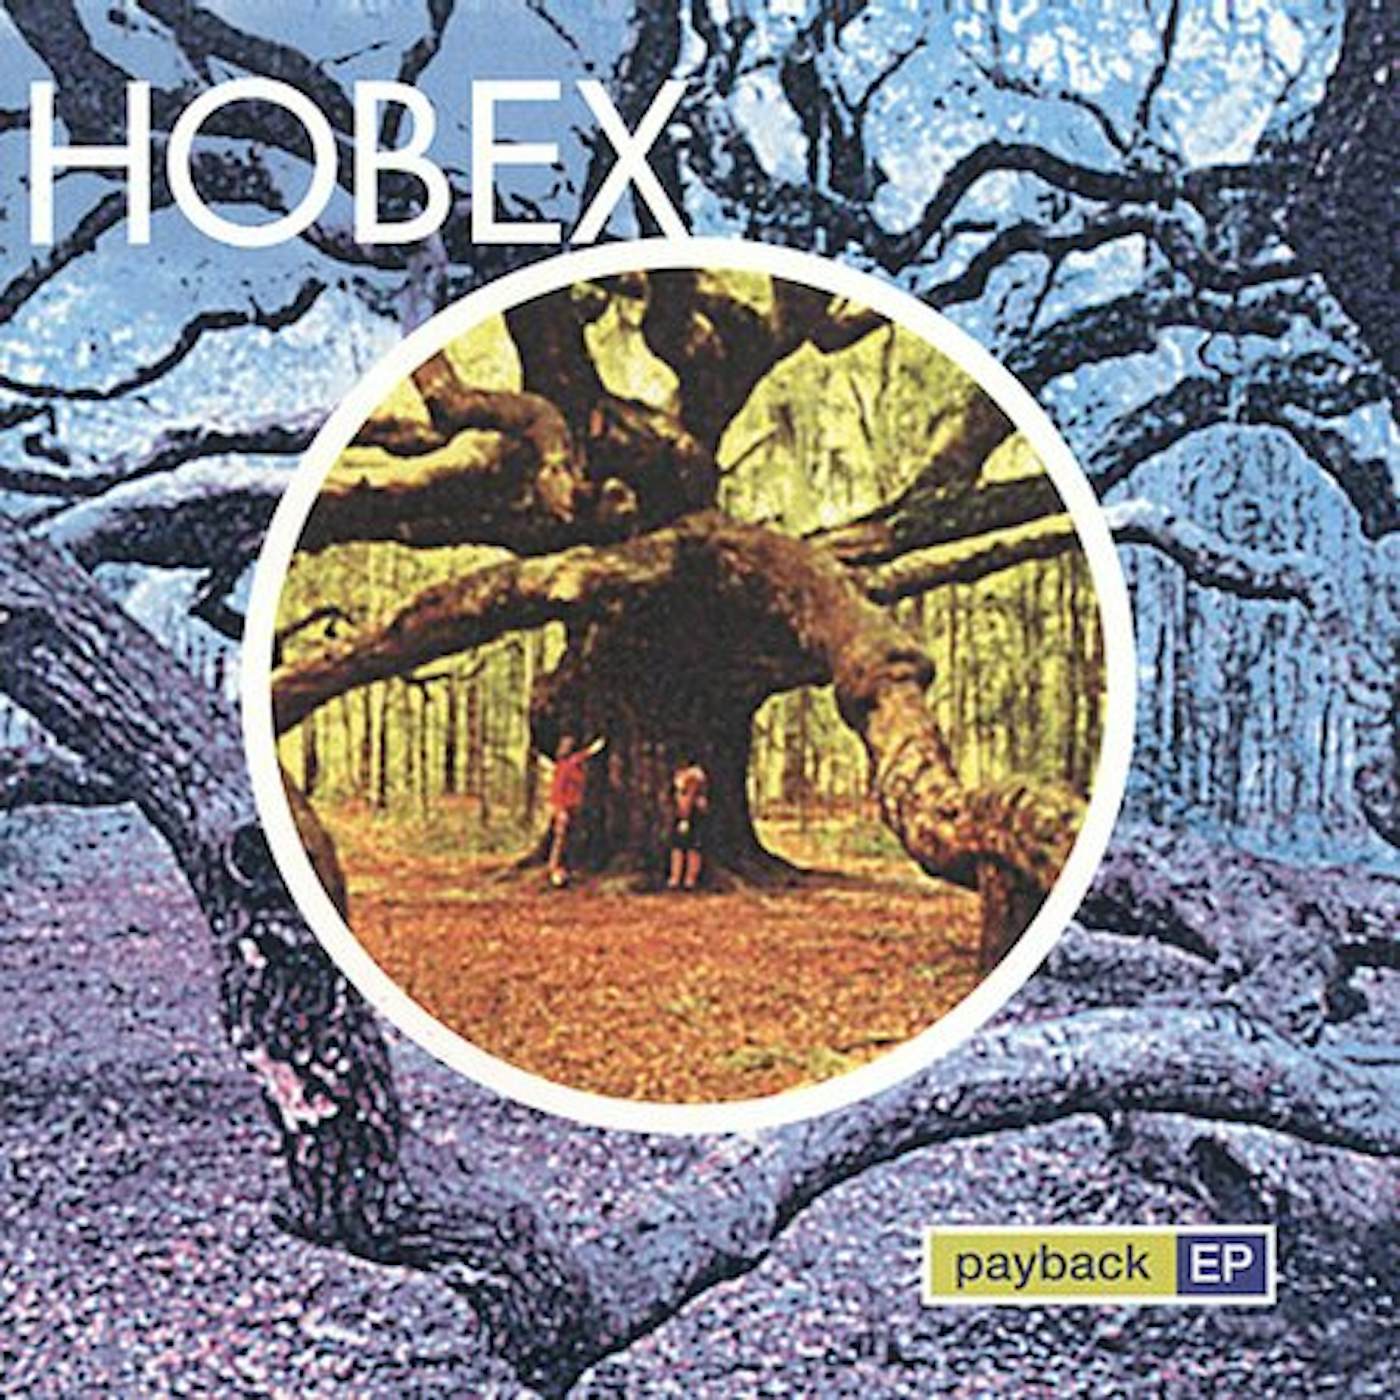 Hobex PAYBACK CD